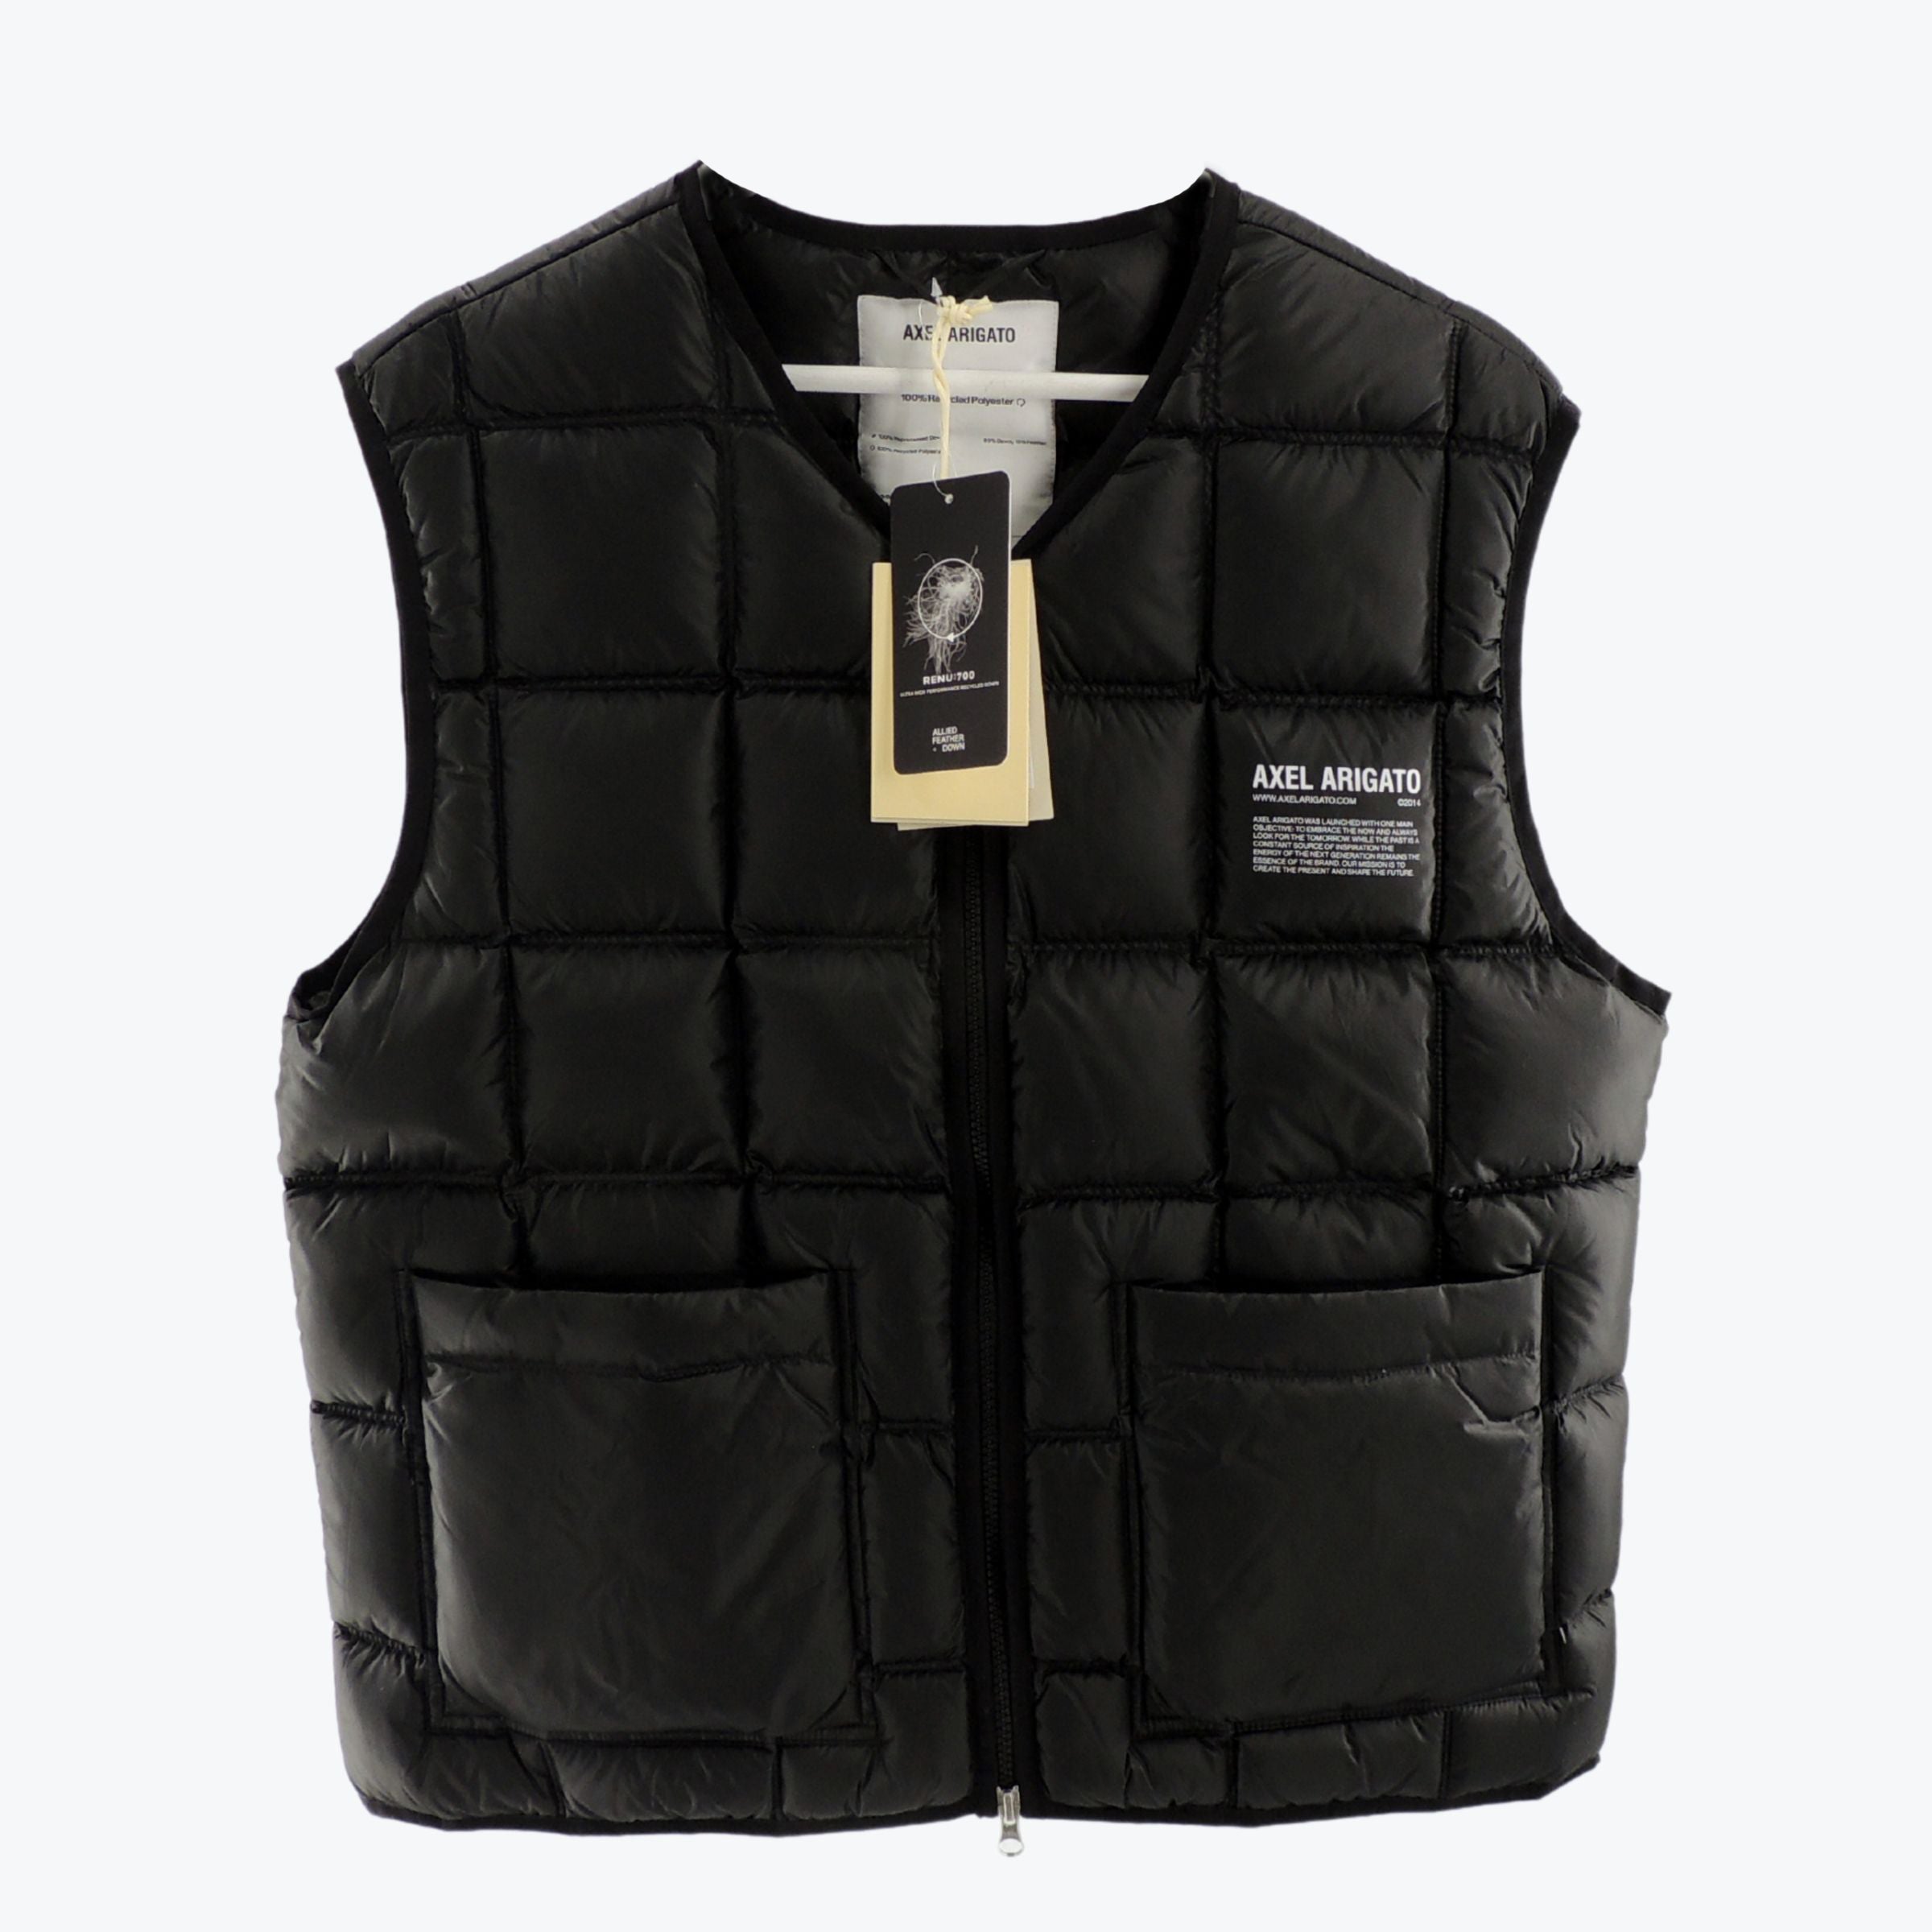 Axel Arigato Binx Putter Vest in Black Medium